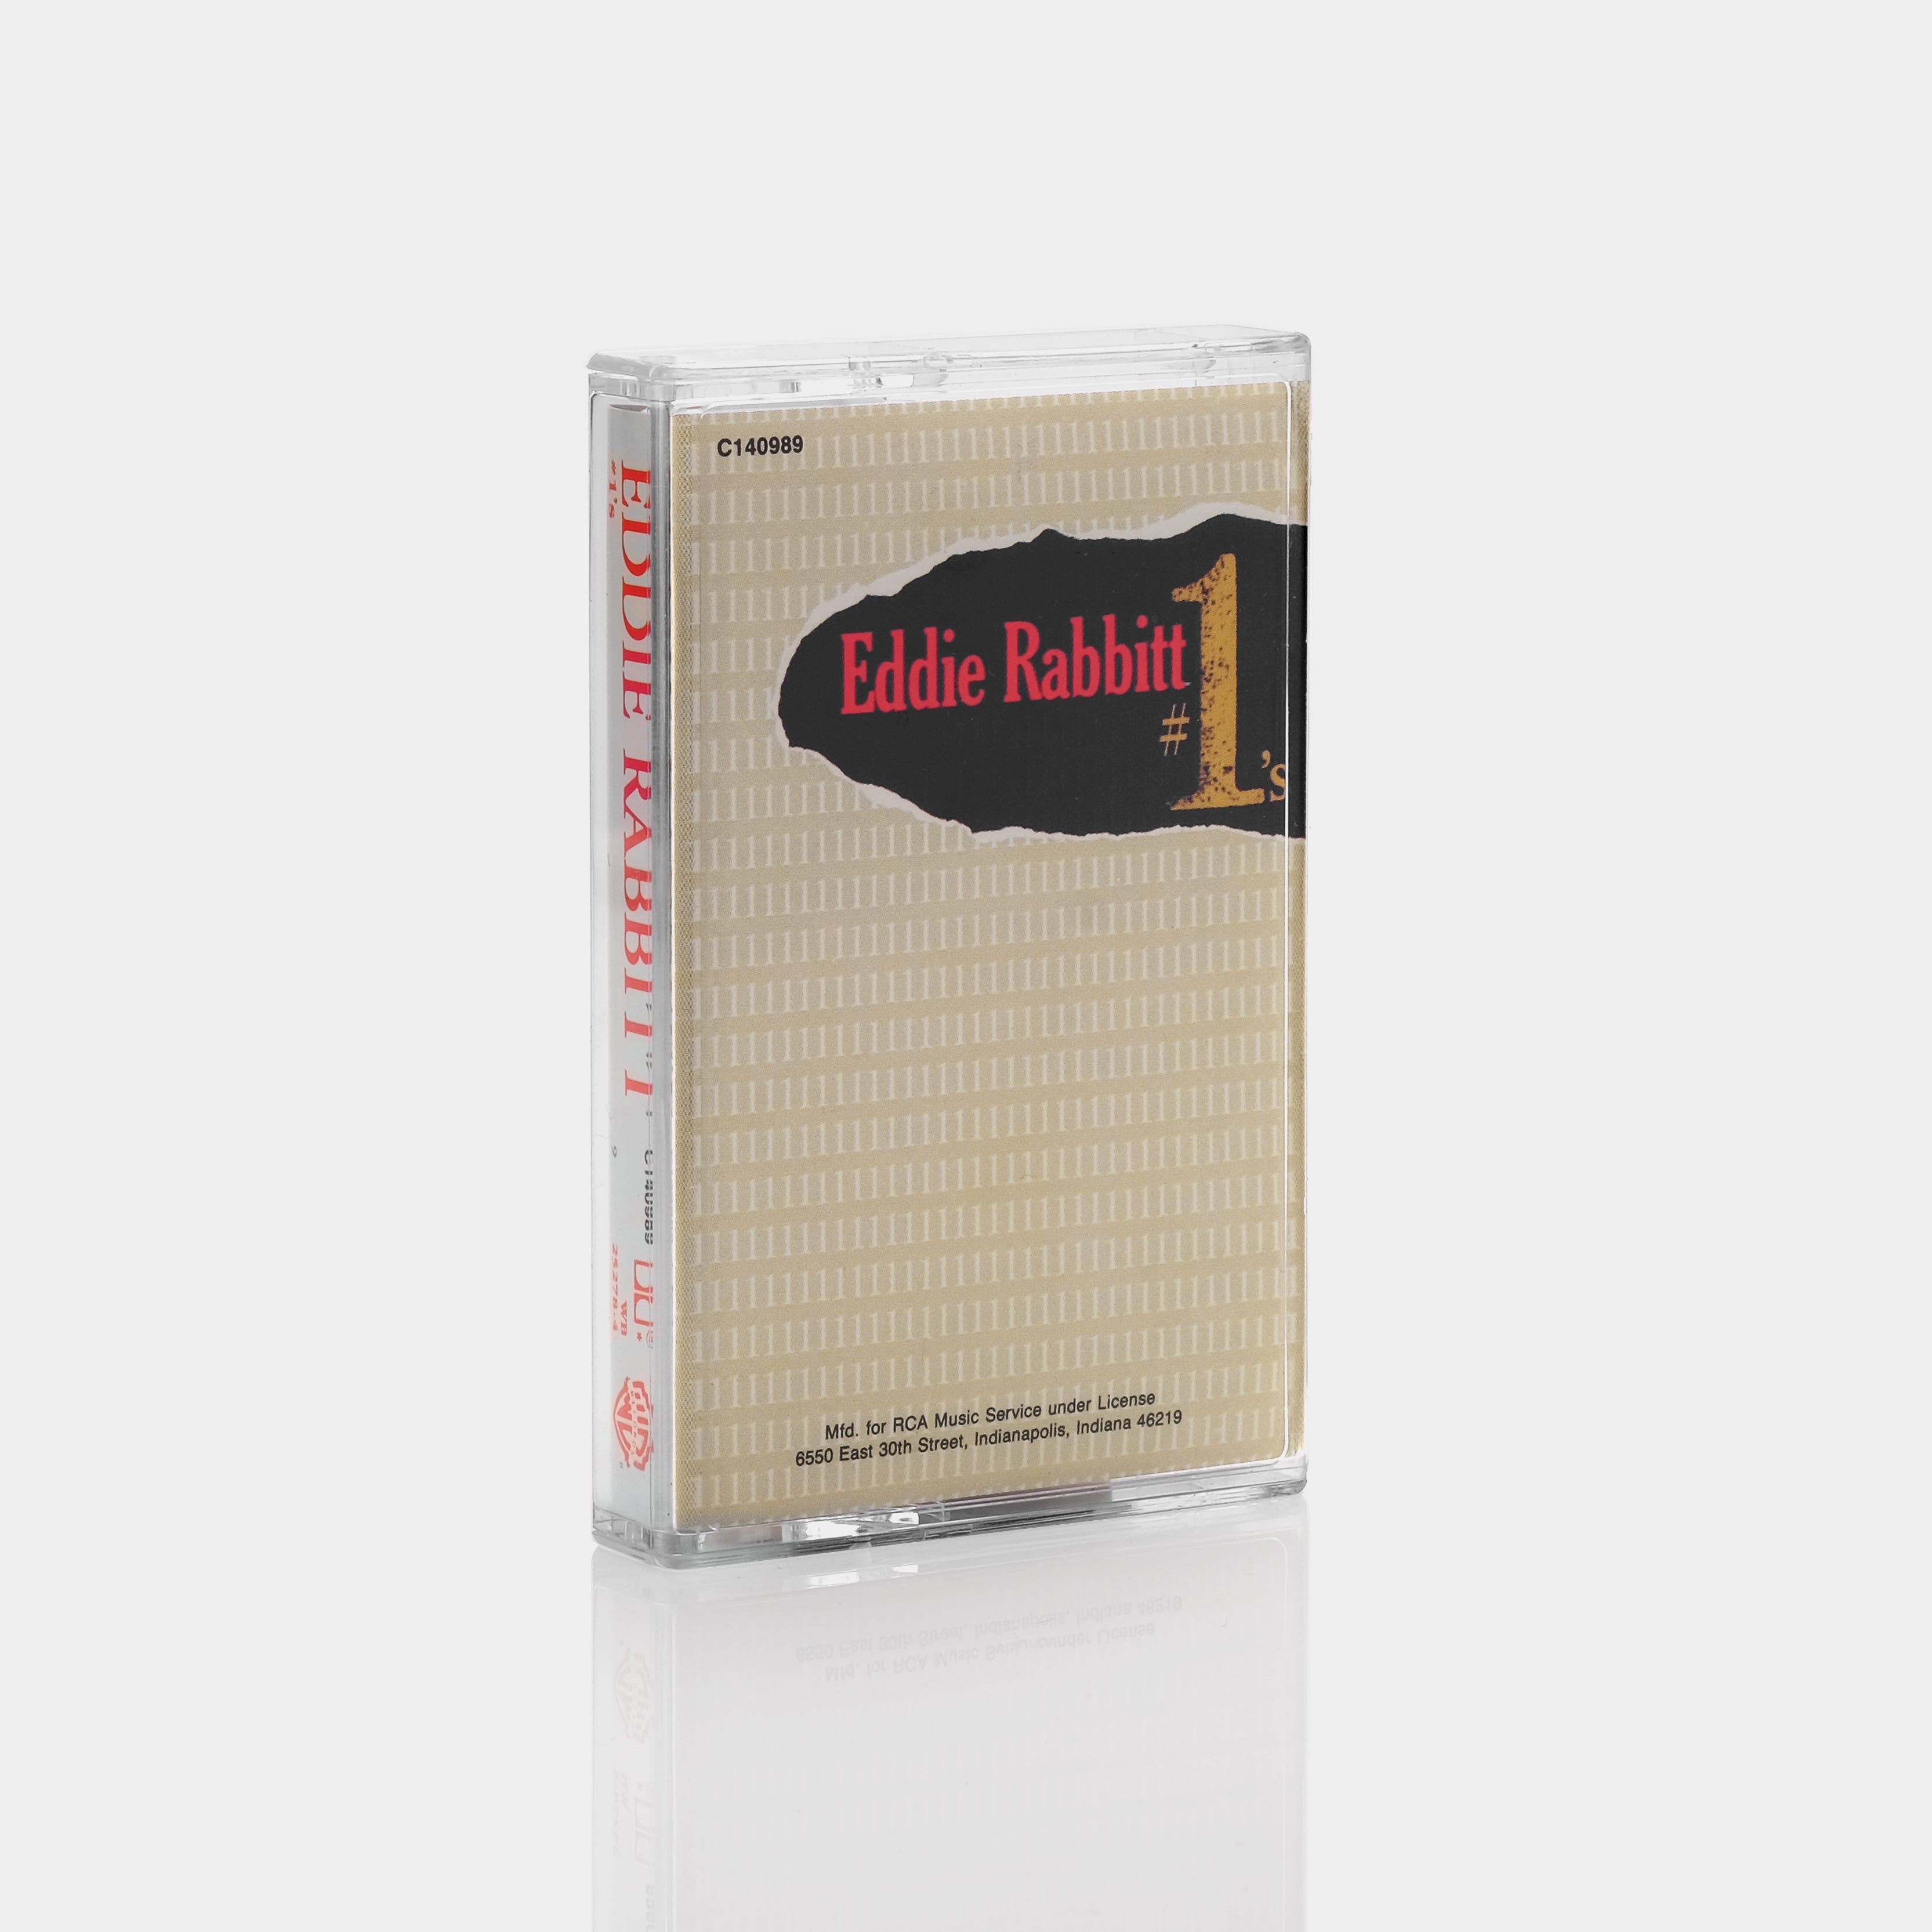 Eddie Rabbit - #1's Cassette Tape